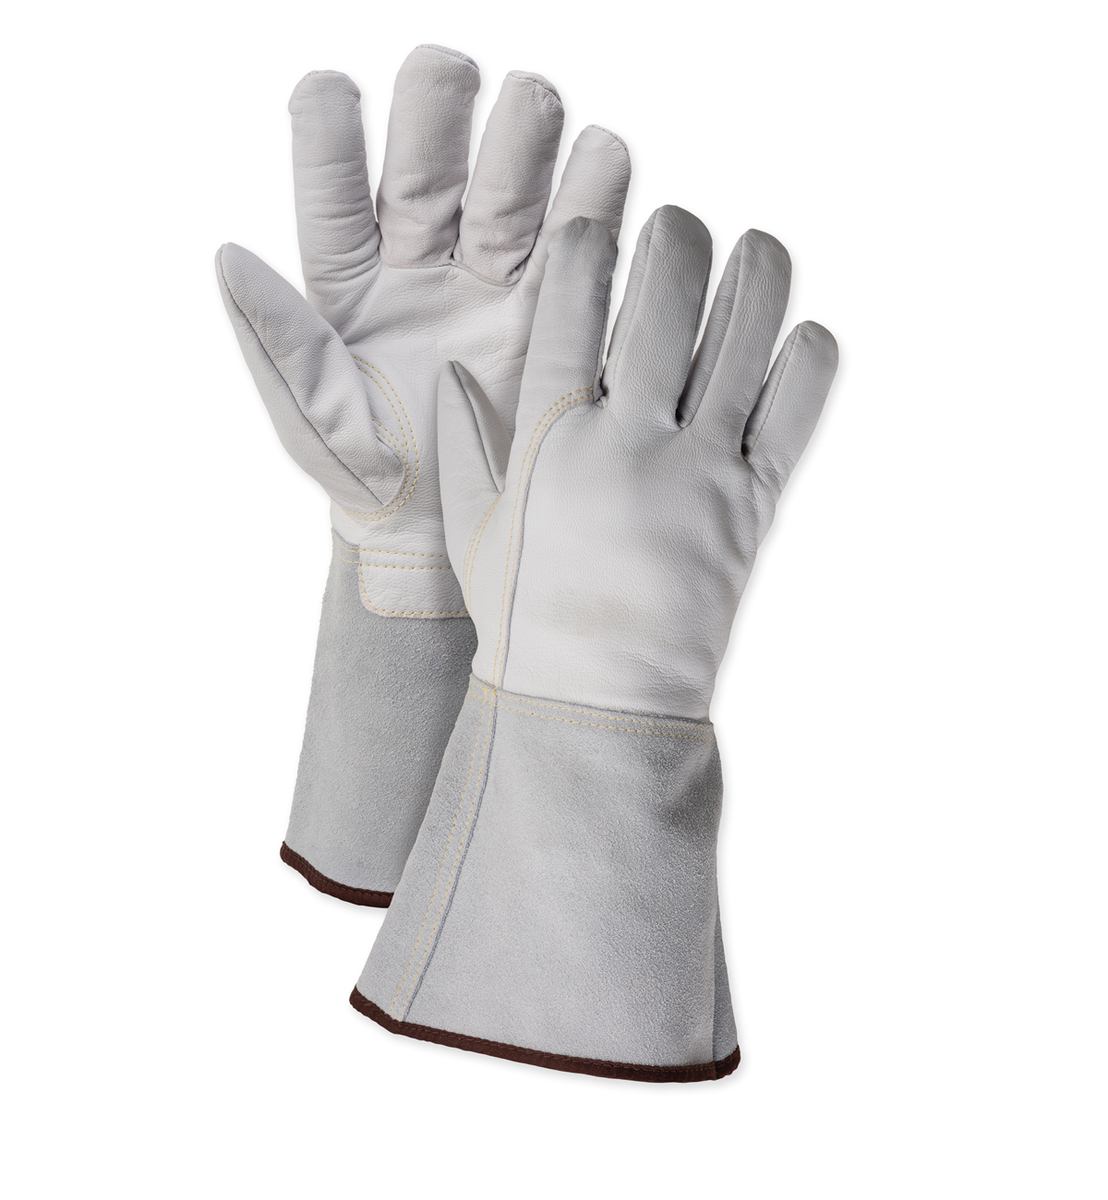 Wells Lamont Medium Goatskin Cut Resistant Gloves